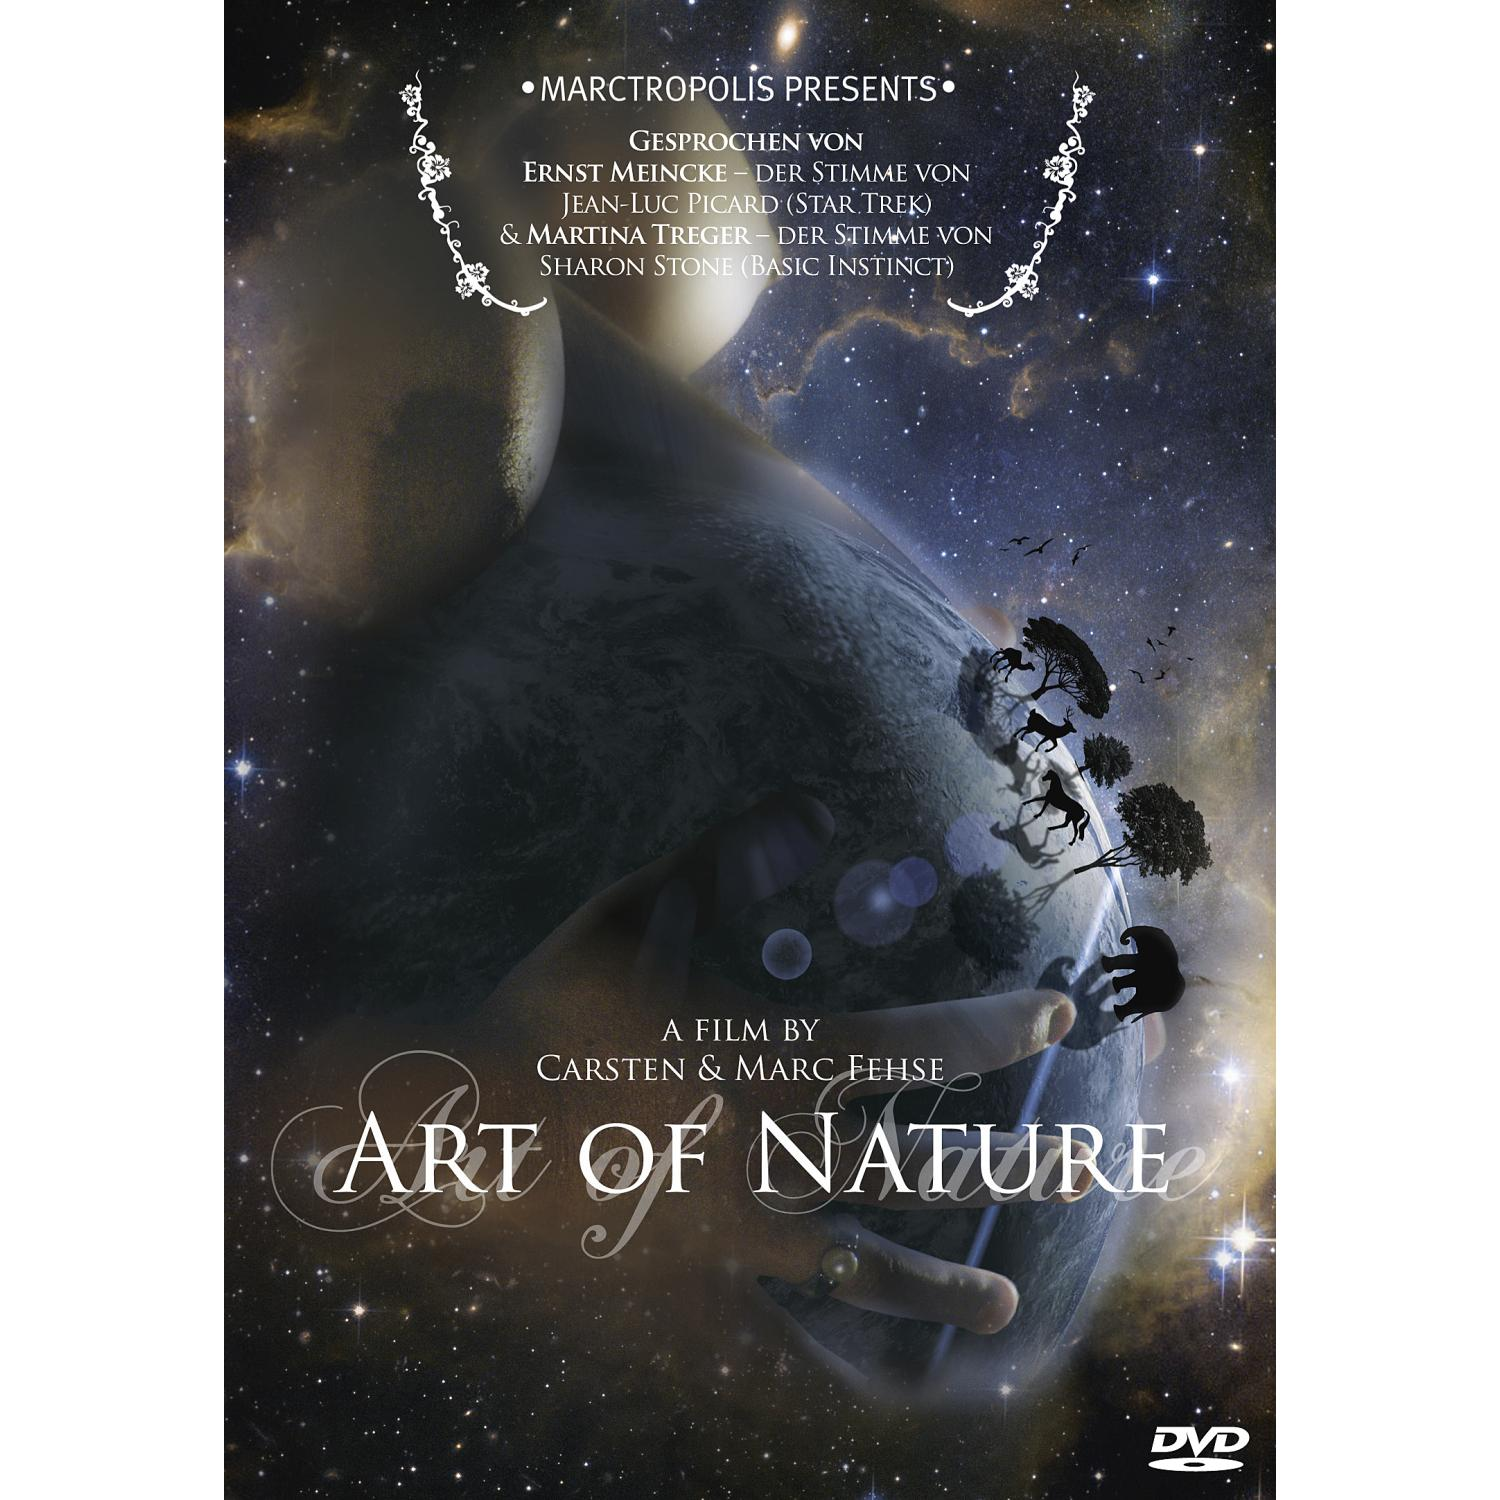 ART OF NATURE DVD